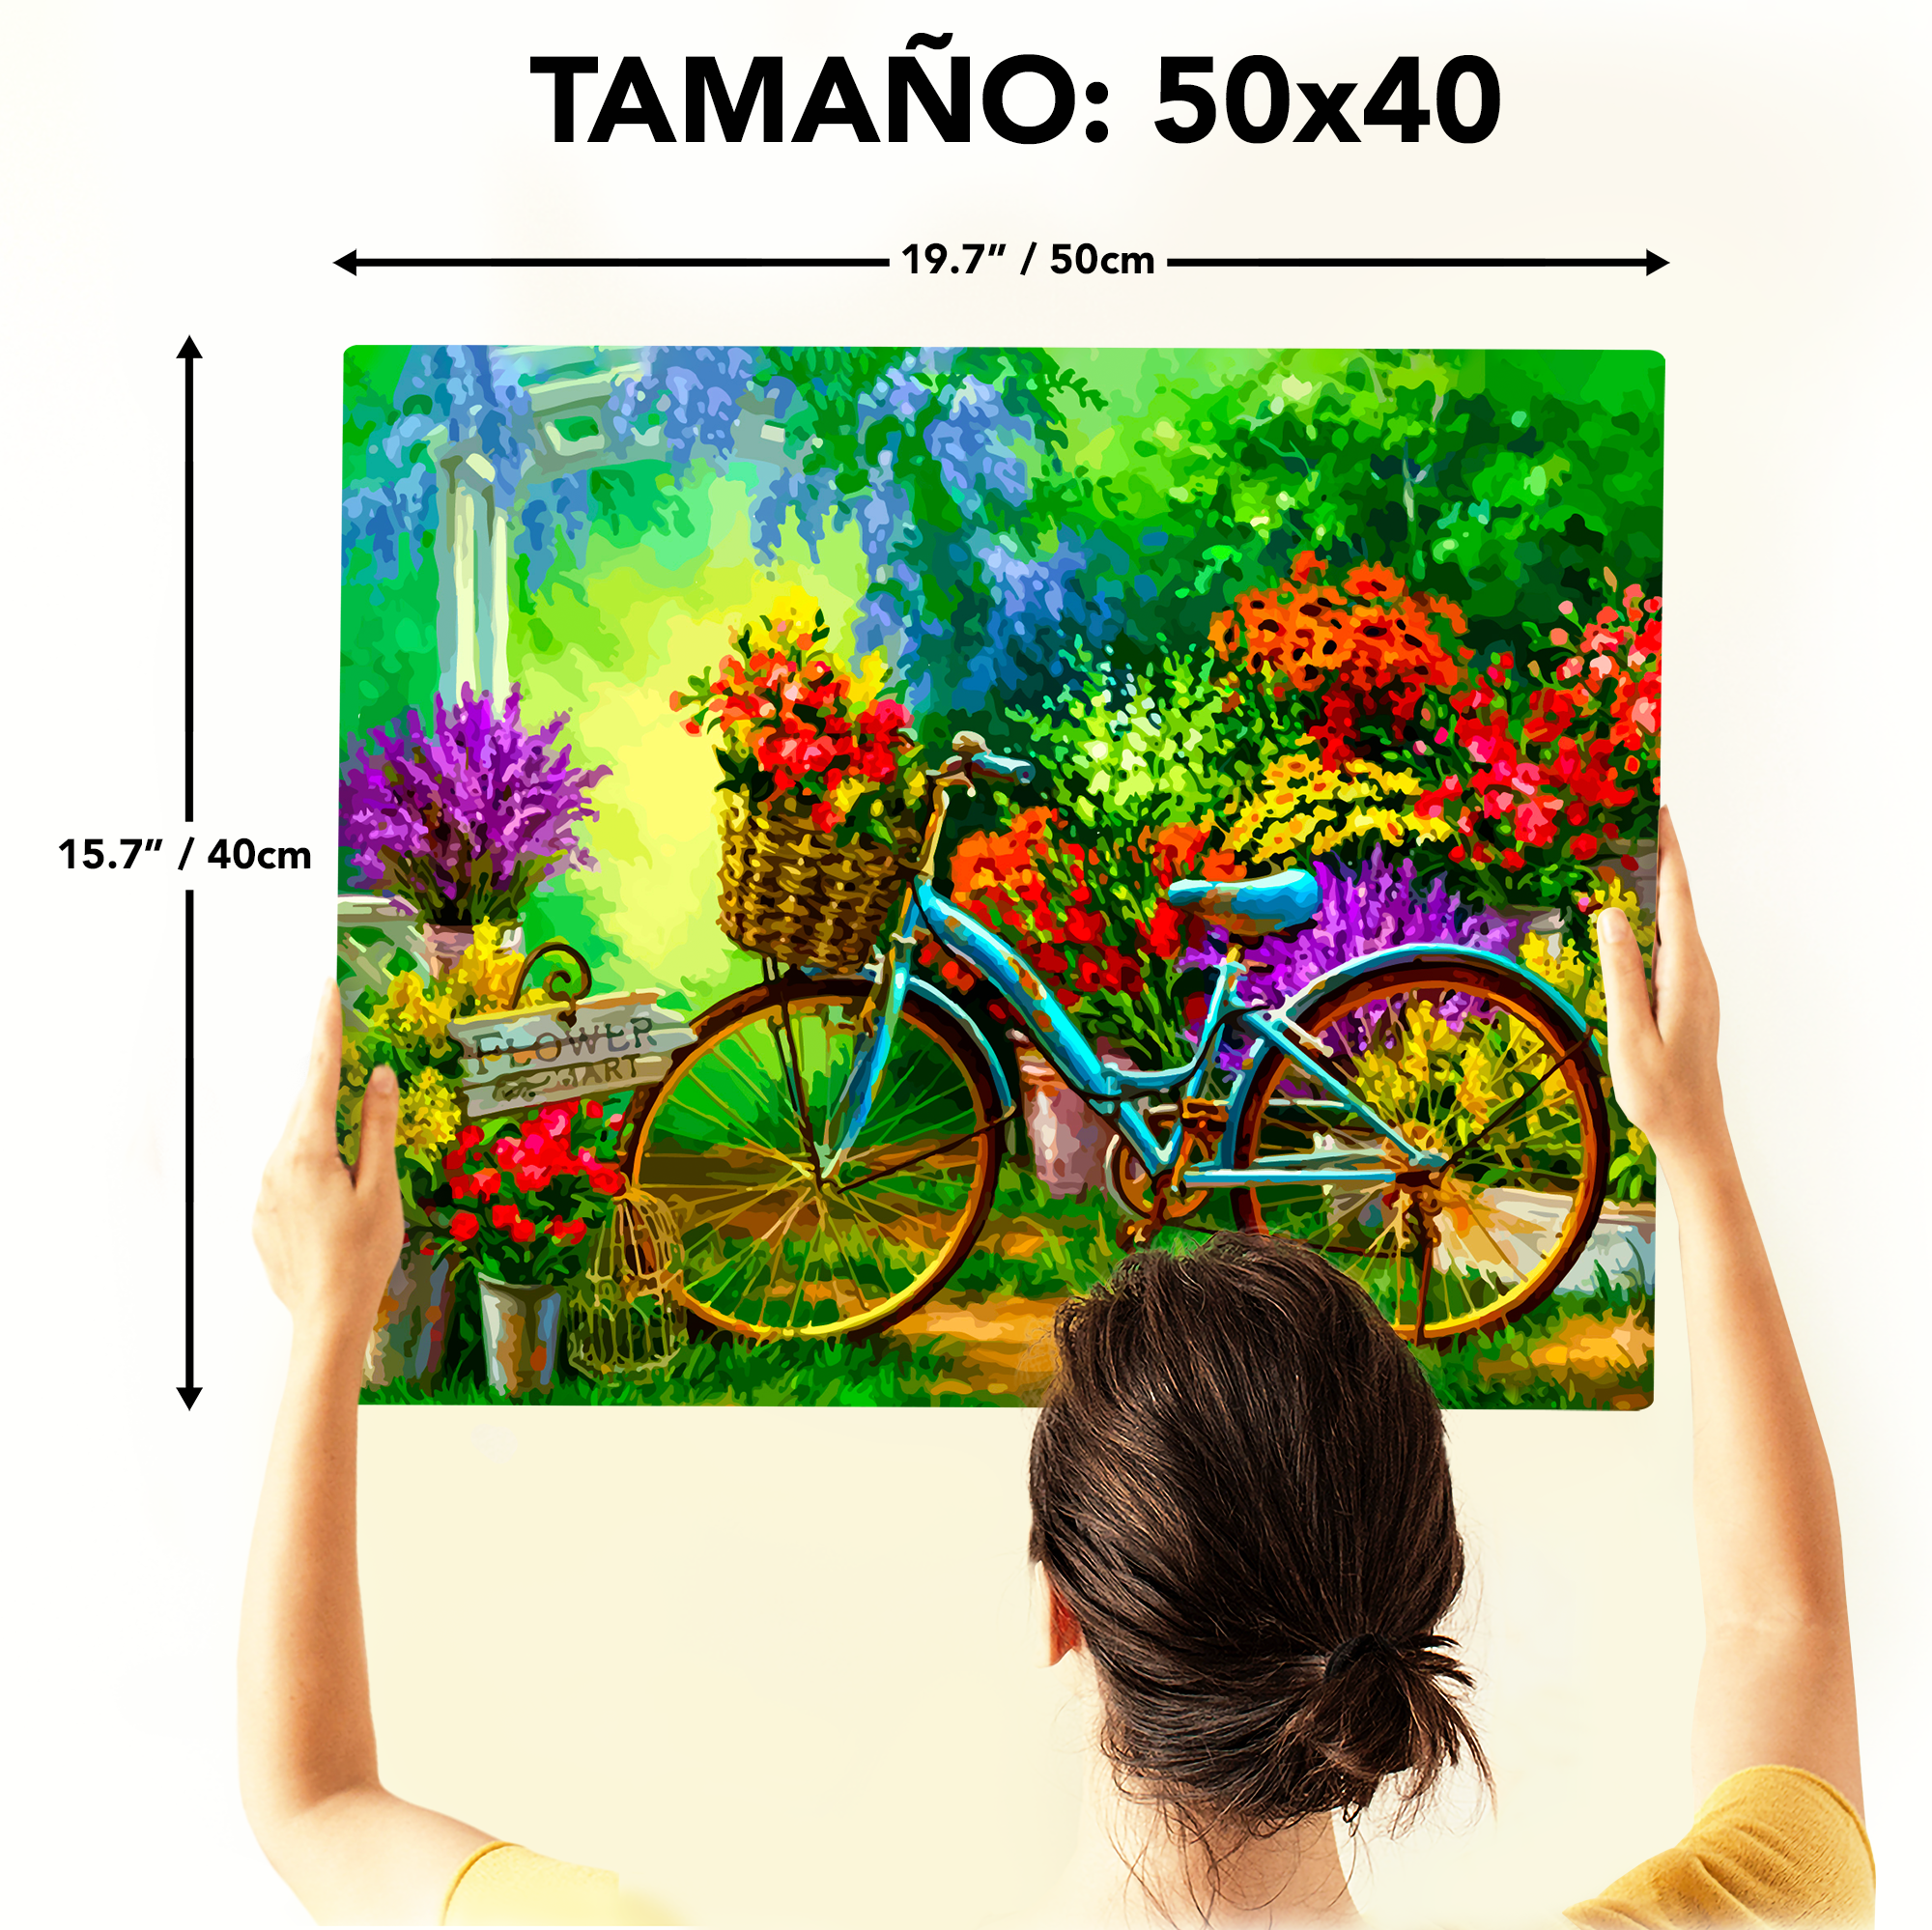 Bicicleta entre las flores: pintura, arte, hobby, creatividad, pintar por números.